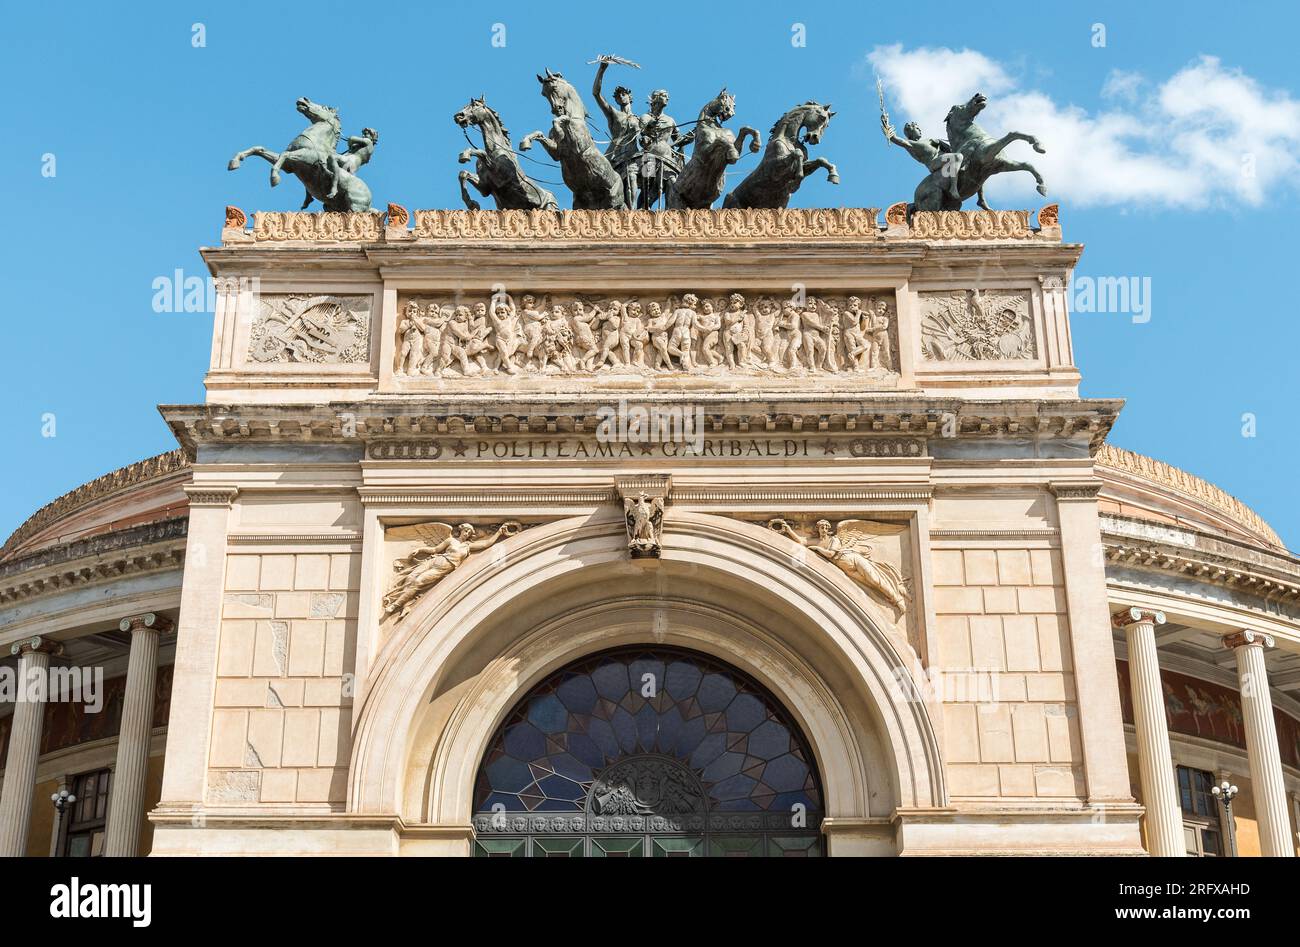 Bronze statues above the entrance of the Politeama Garibaldi theater in Palermo, Sicily, Italy Stock Photo